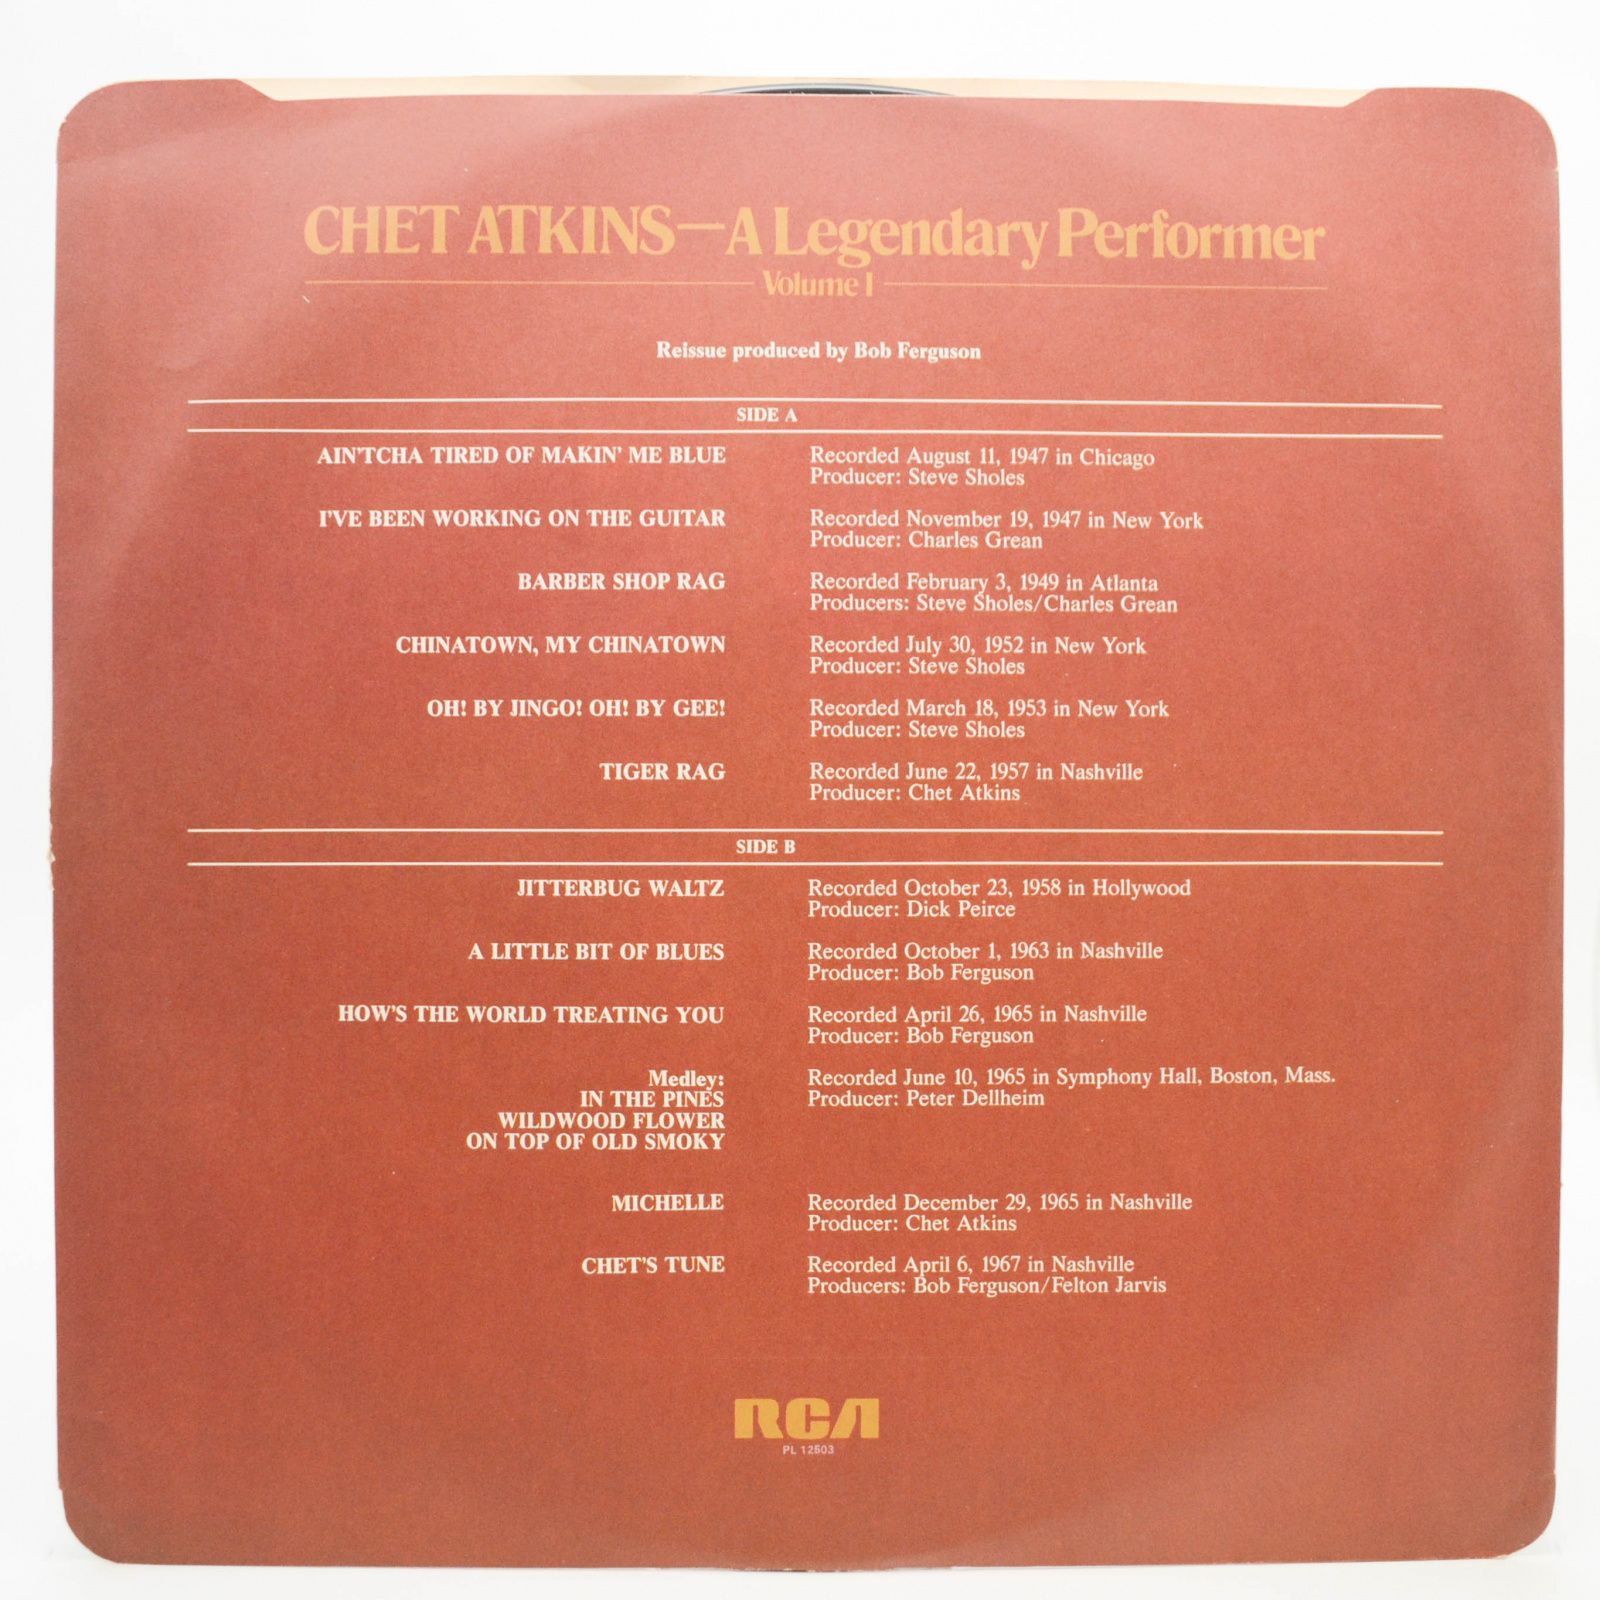 Chet Atkins — A Legendary Performer Volume 1 (UK, booklet), 1977